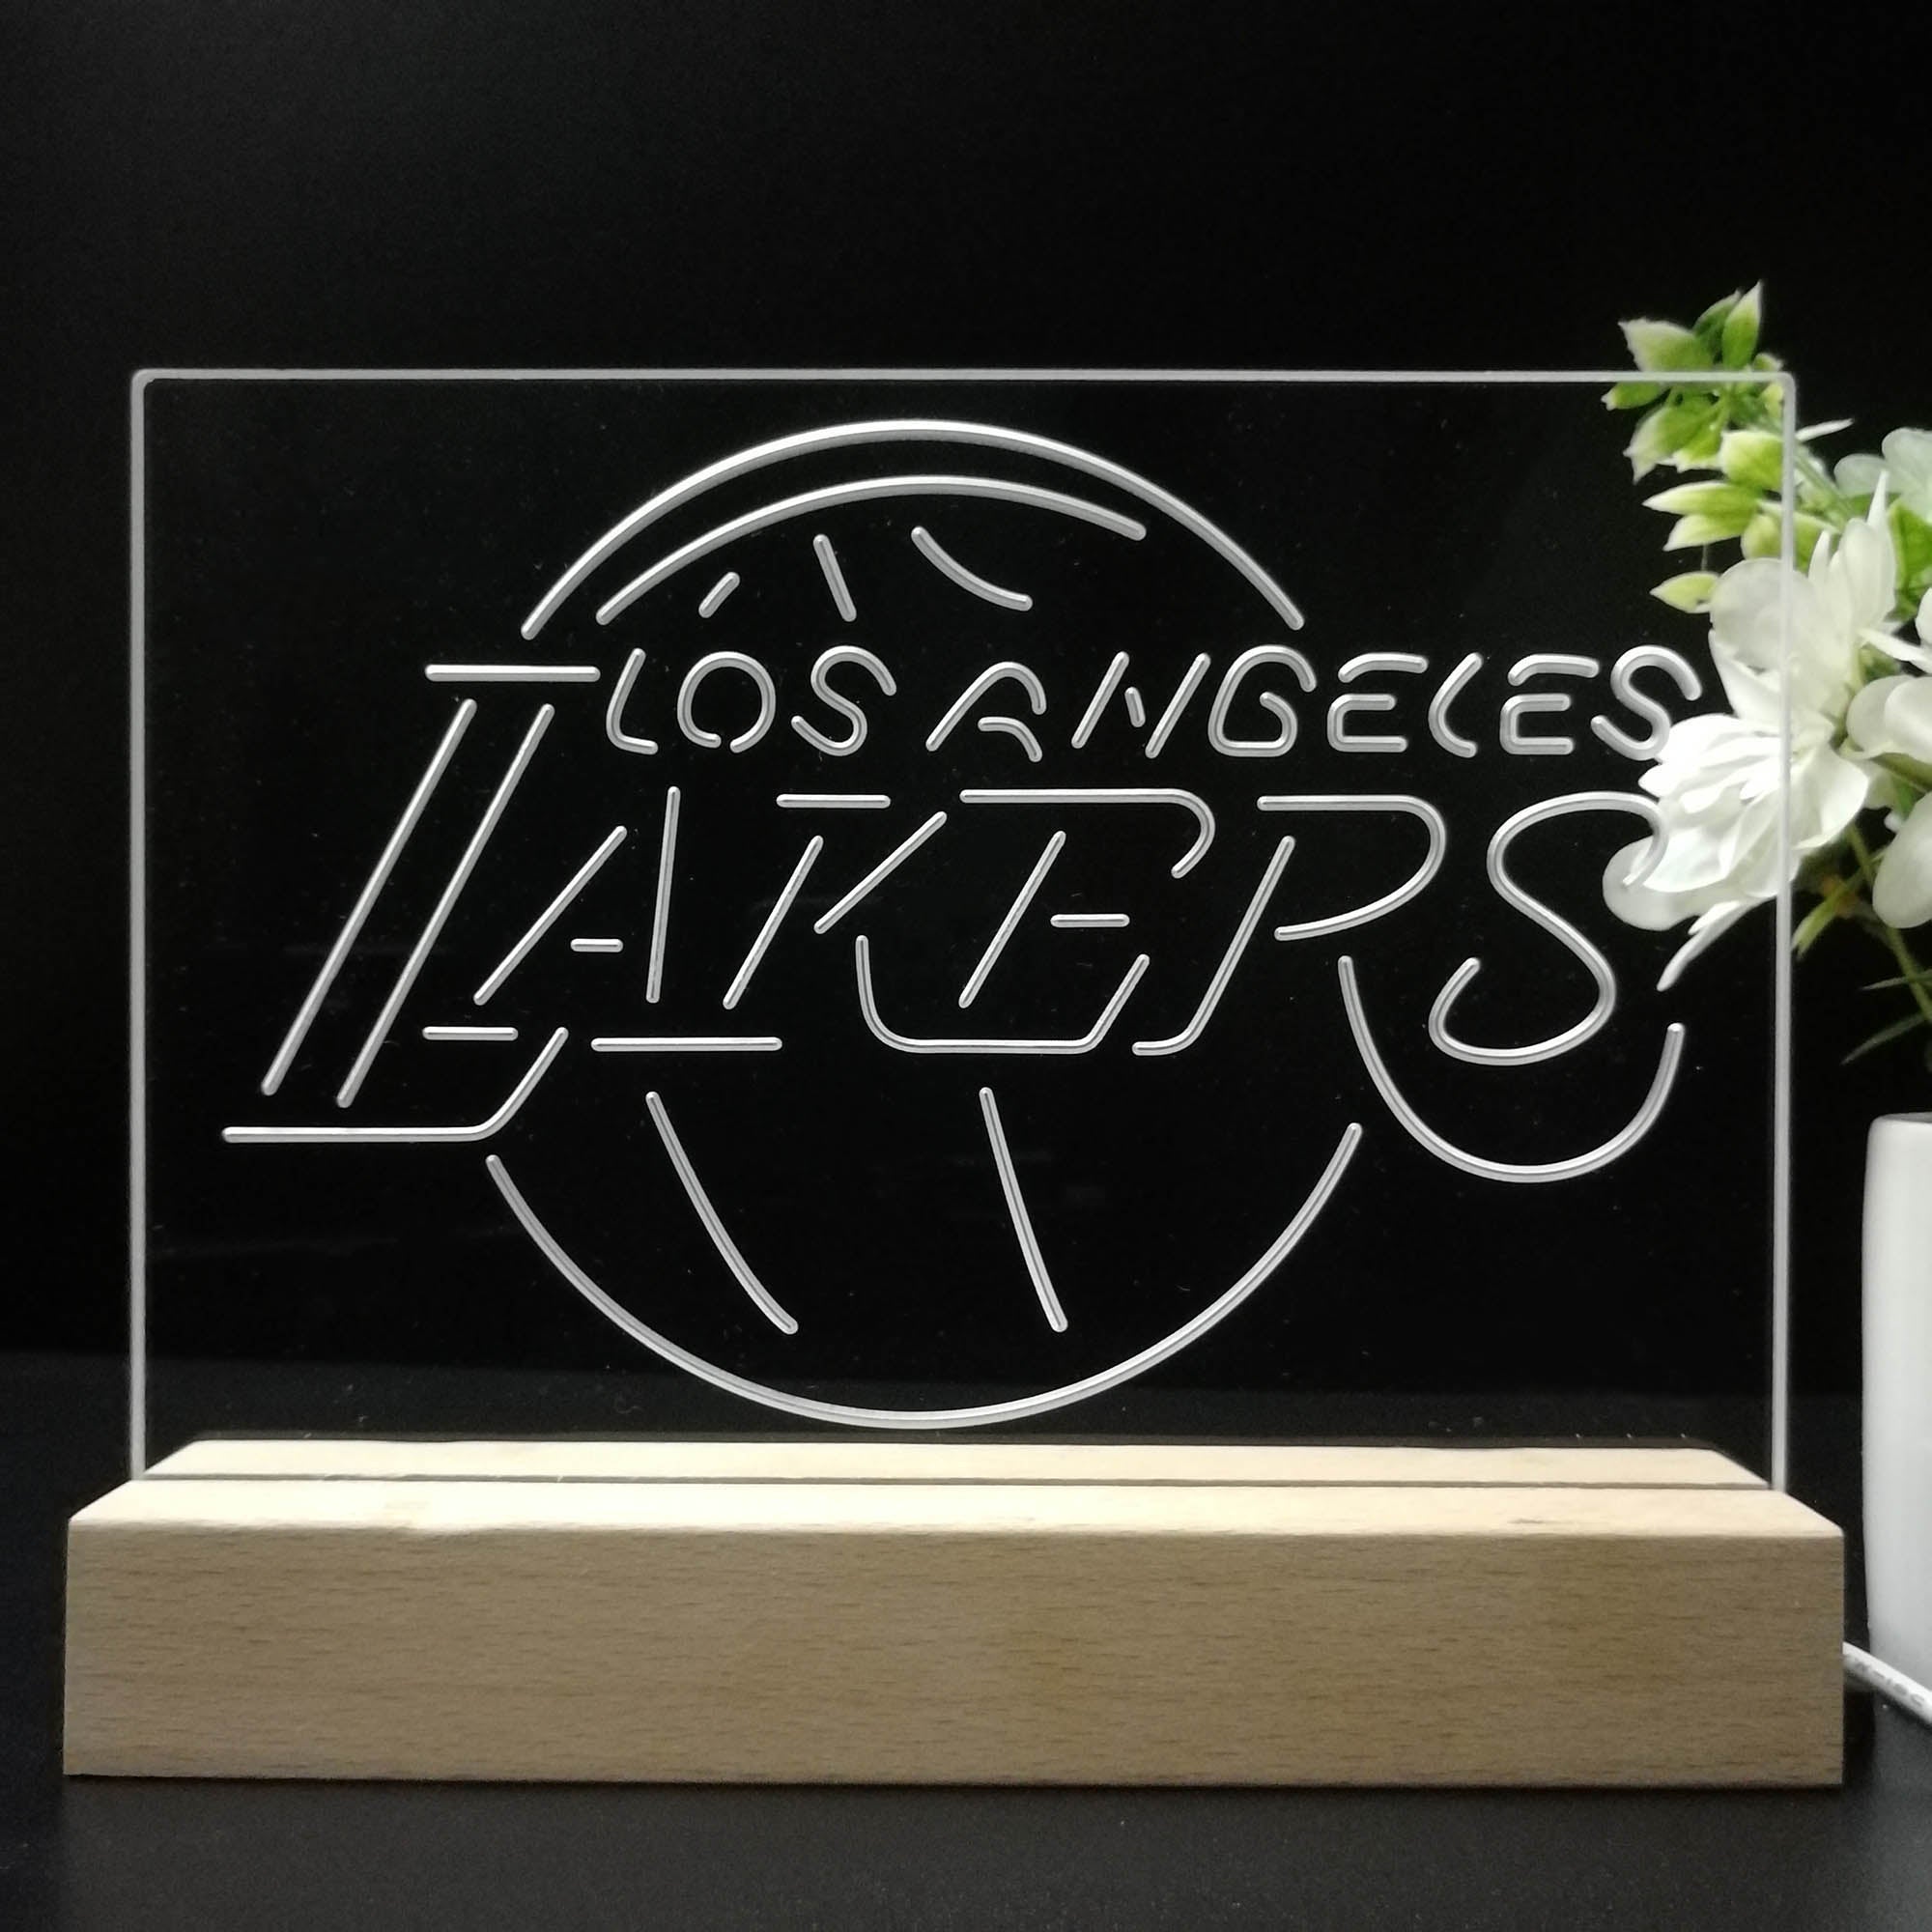 Los Angeles Lakers 3D LED Optical Illusion Sport Team Night Light